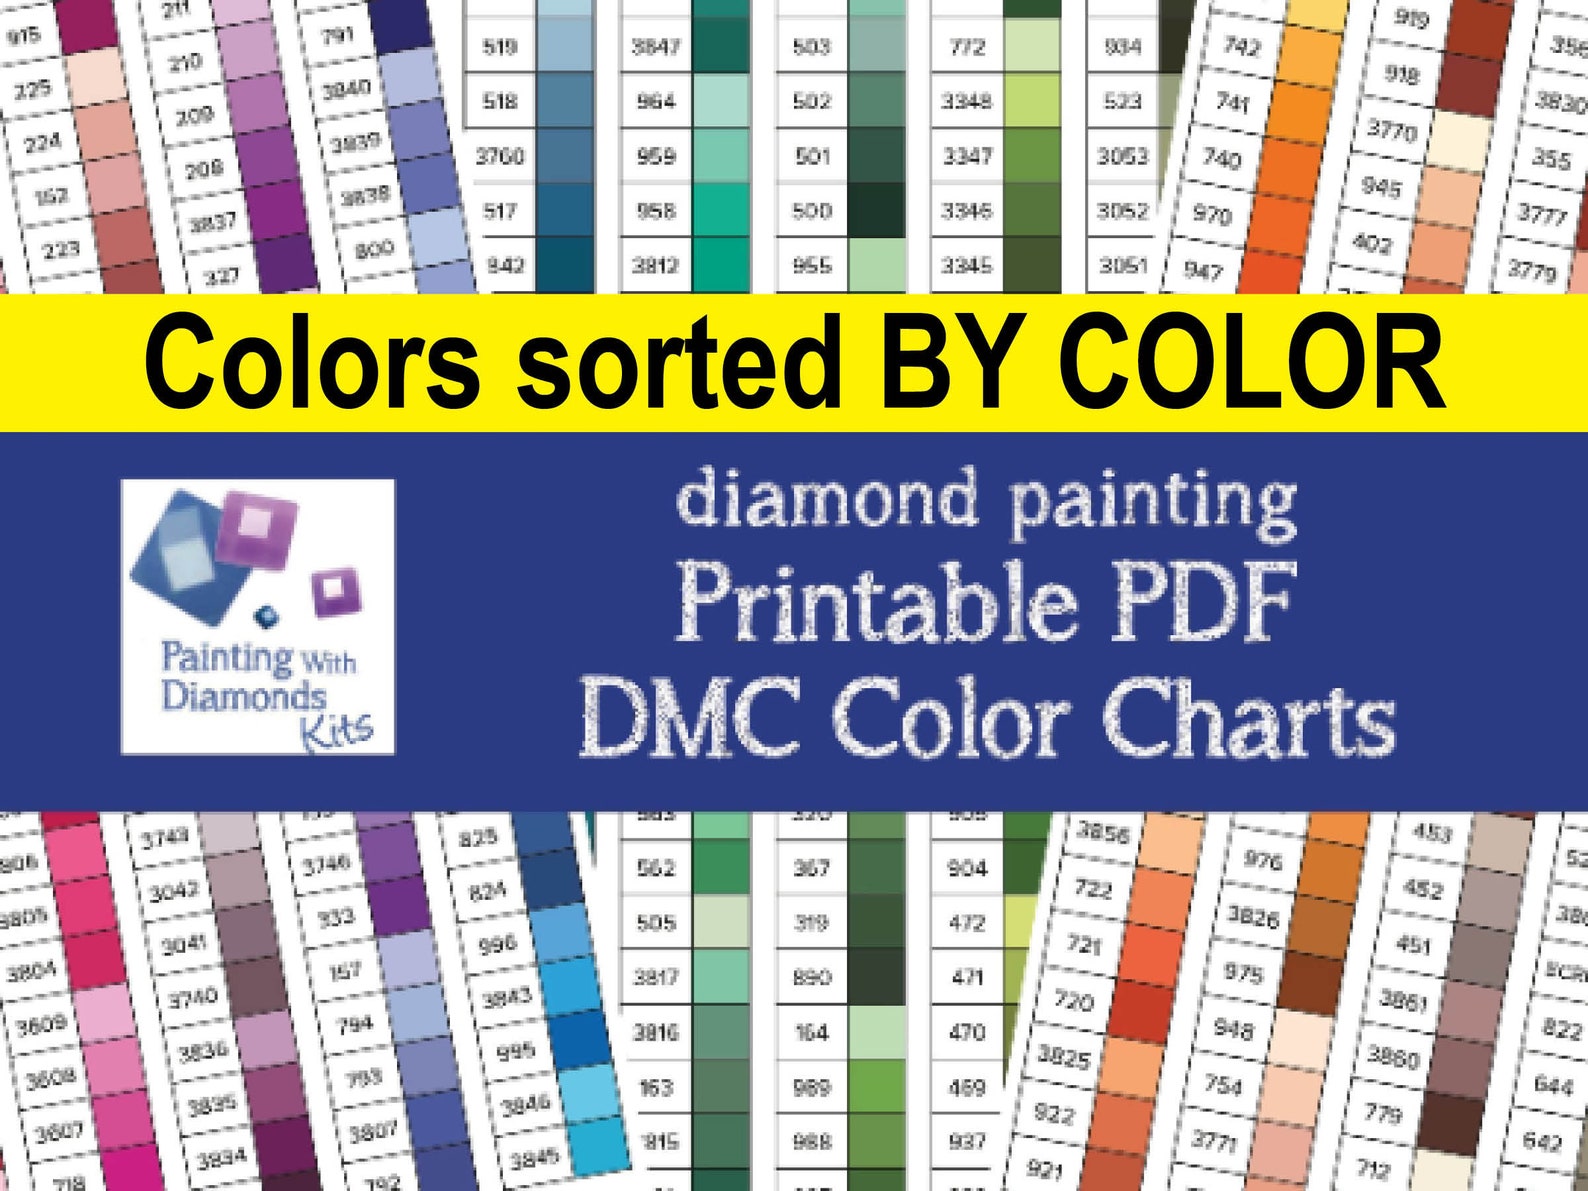 printable-pdf-dmc-color-charts-diamond-painting-drill-color-etsy